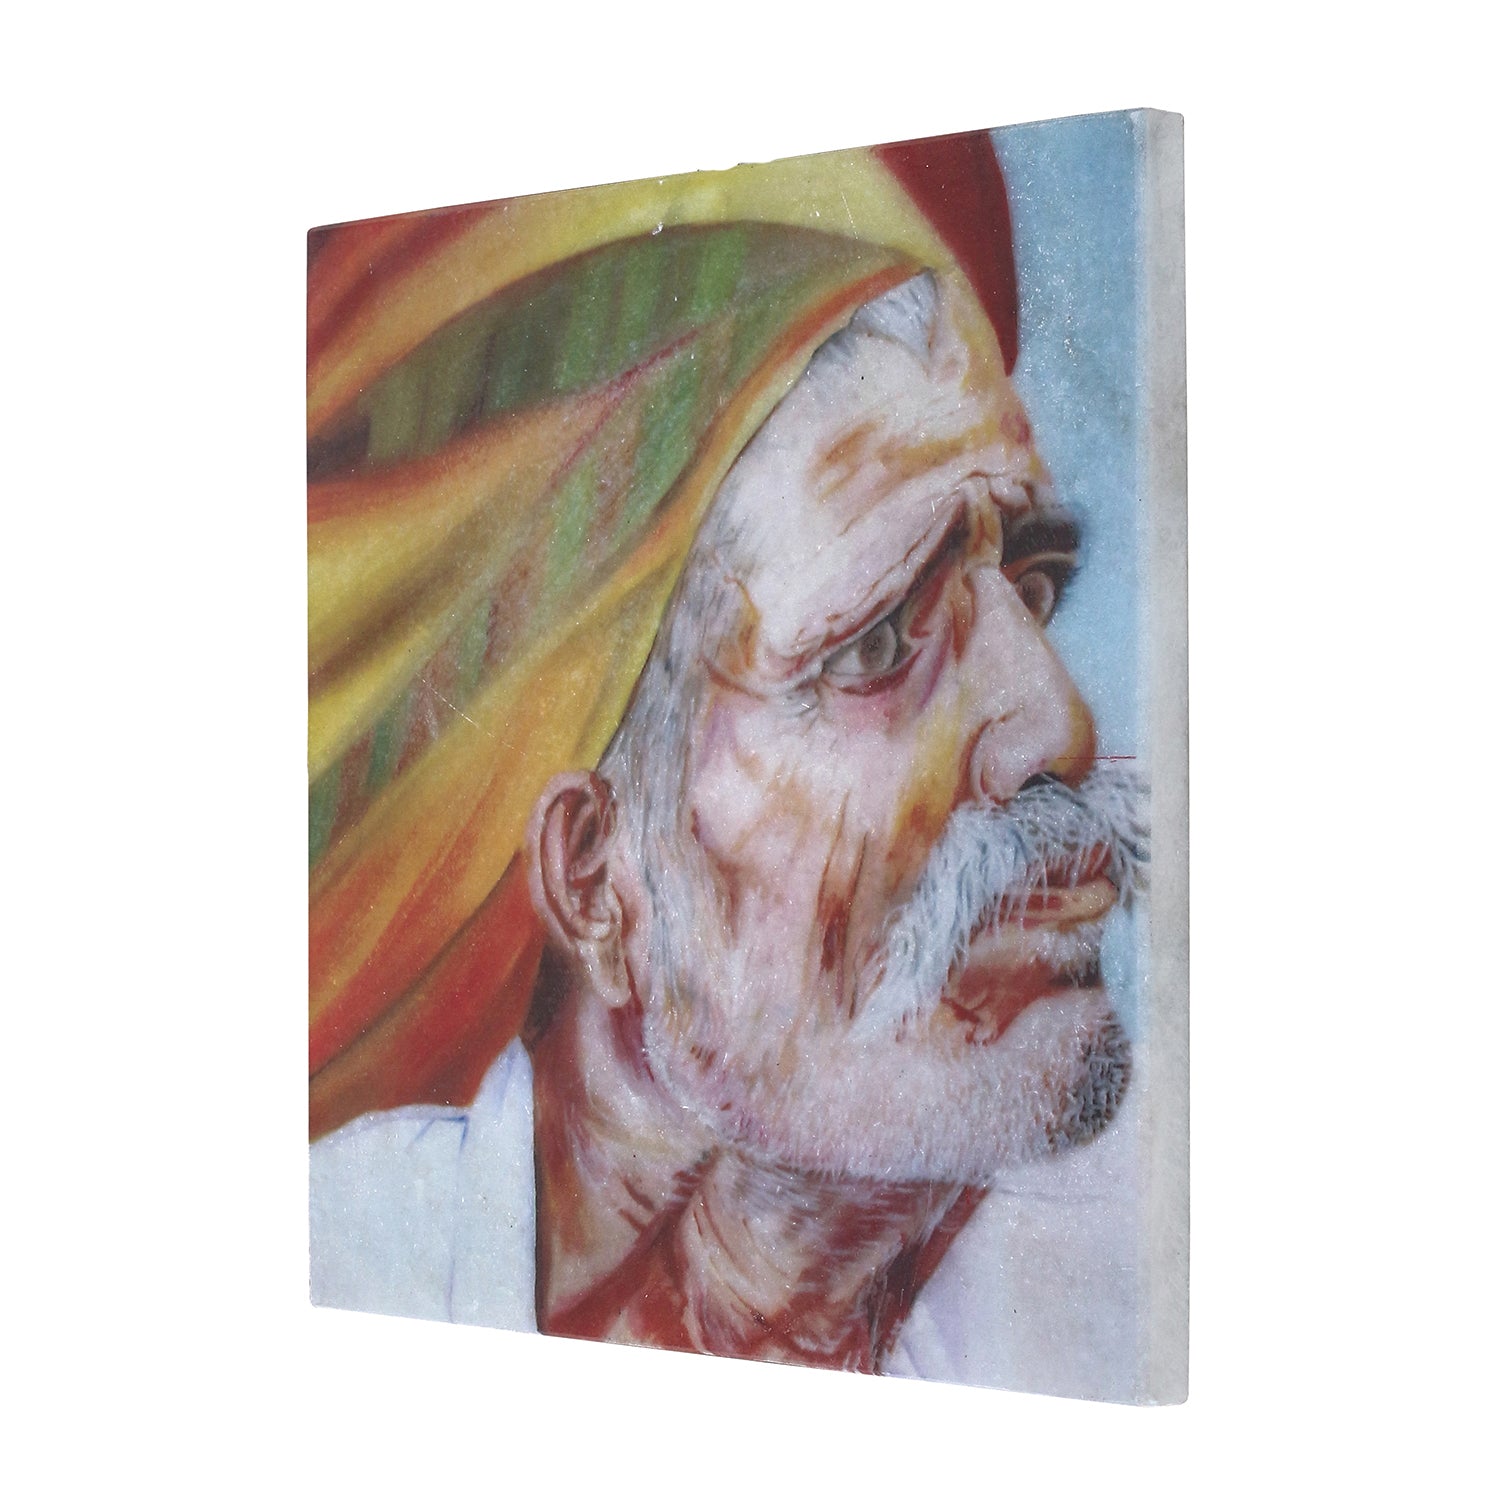 Rajasthani Old Man Wearing Turban Painting On Marble Square Tile 4